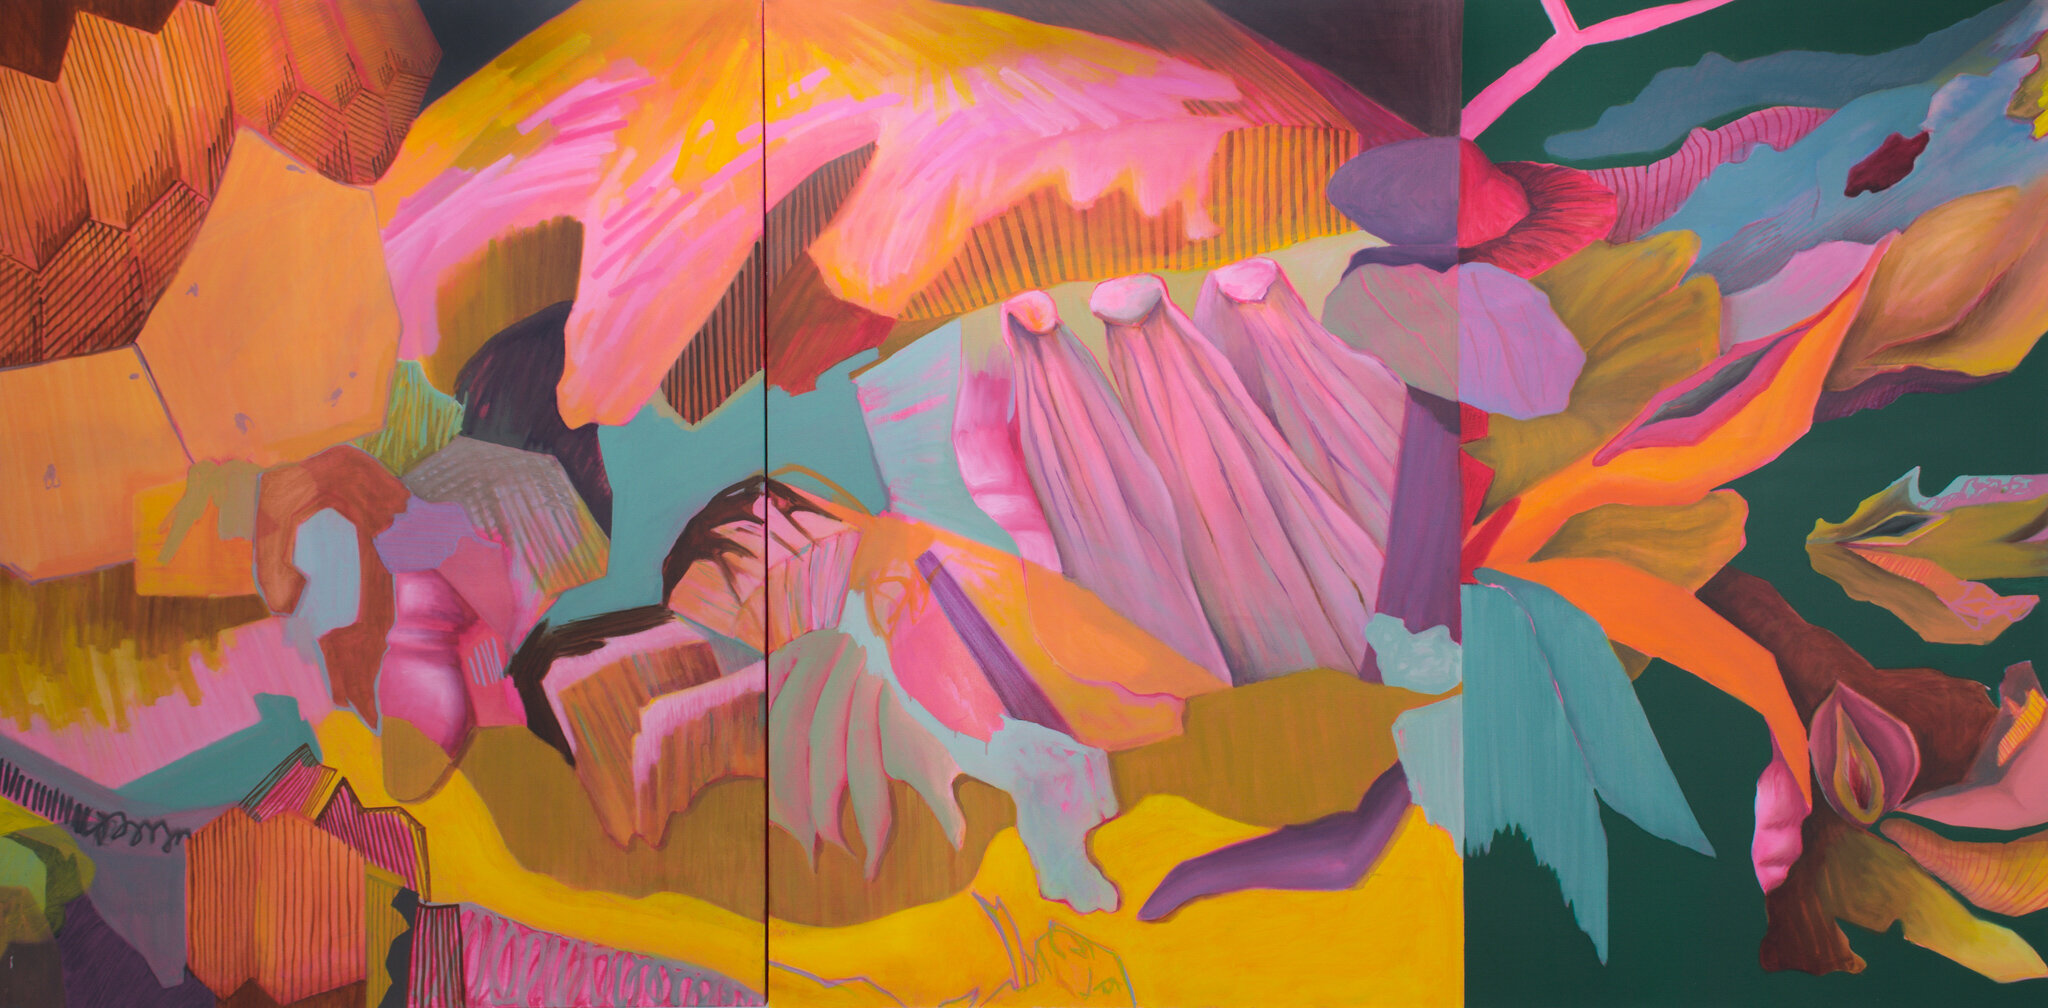   Transcendence . Oil on canvas. 36”x48”; 48”x60”. 2019. 